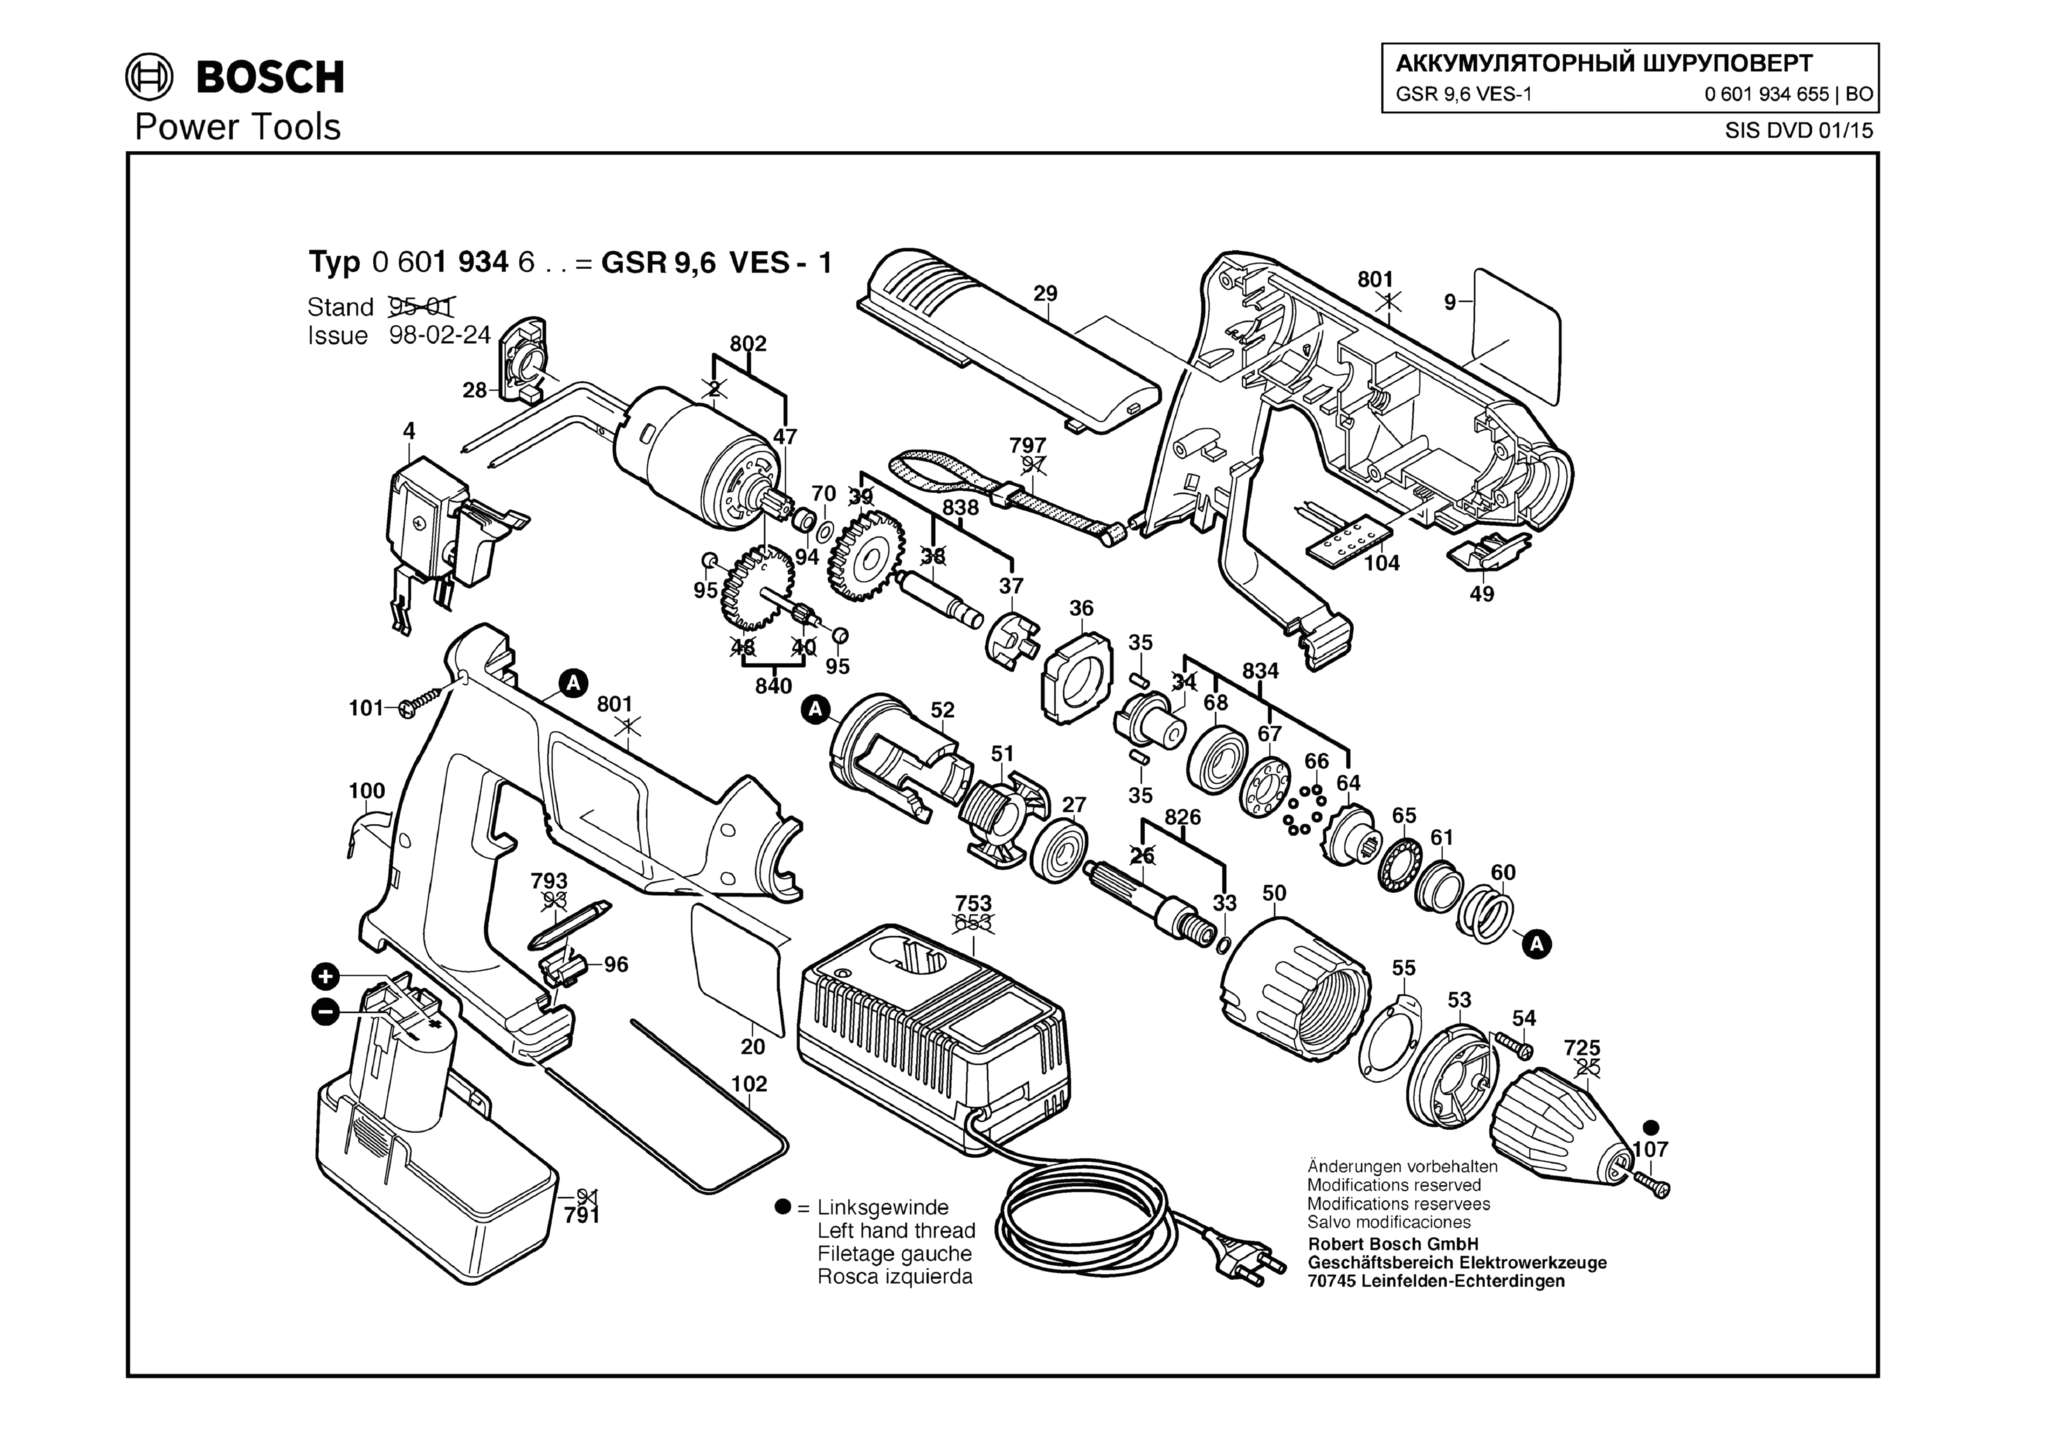 Запчасти, схема и деталировка Bosch GSR 9,6 VES-1 (ТИП 0601934655)